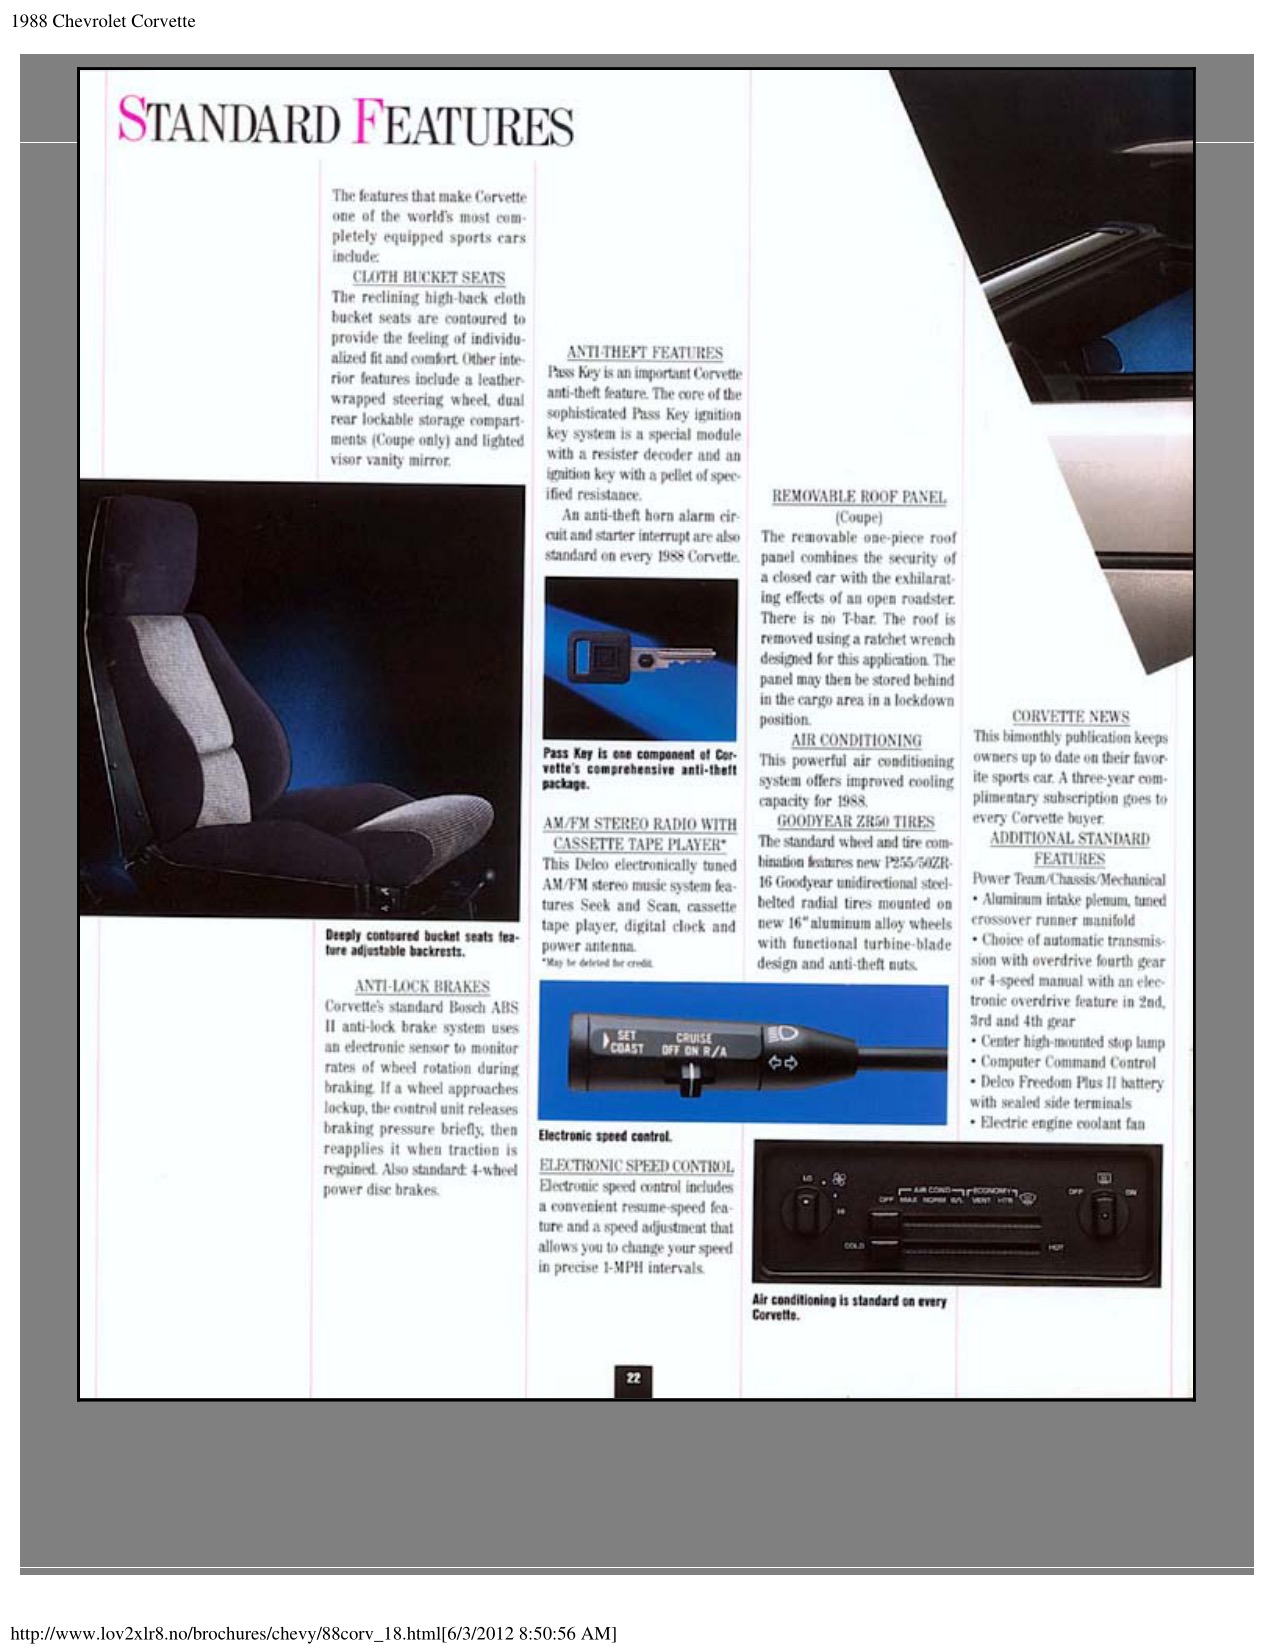 1988 Corvette Brochure Page 18